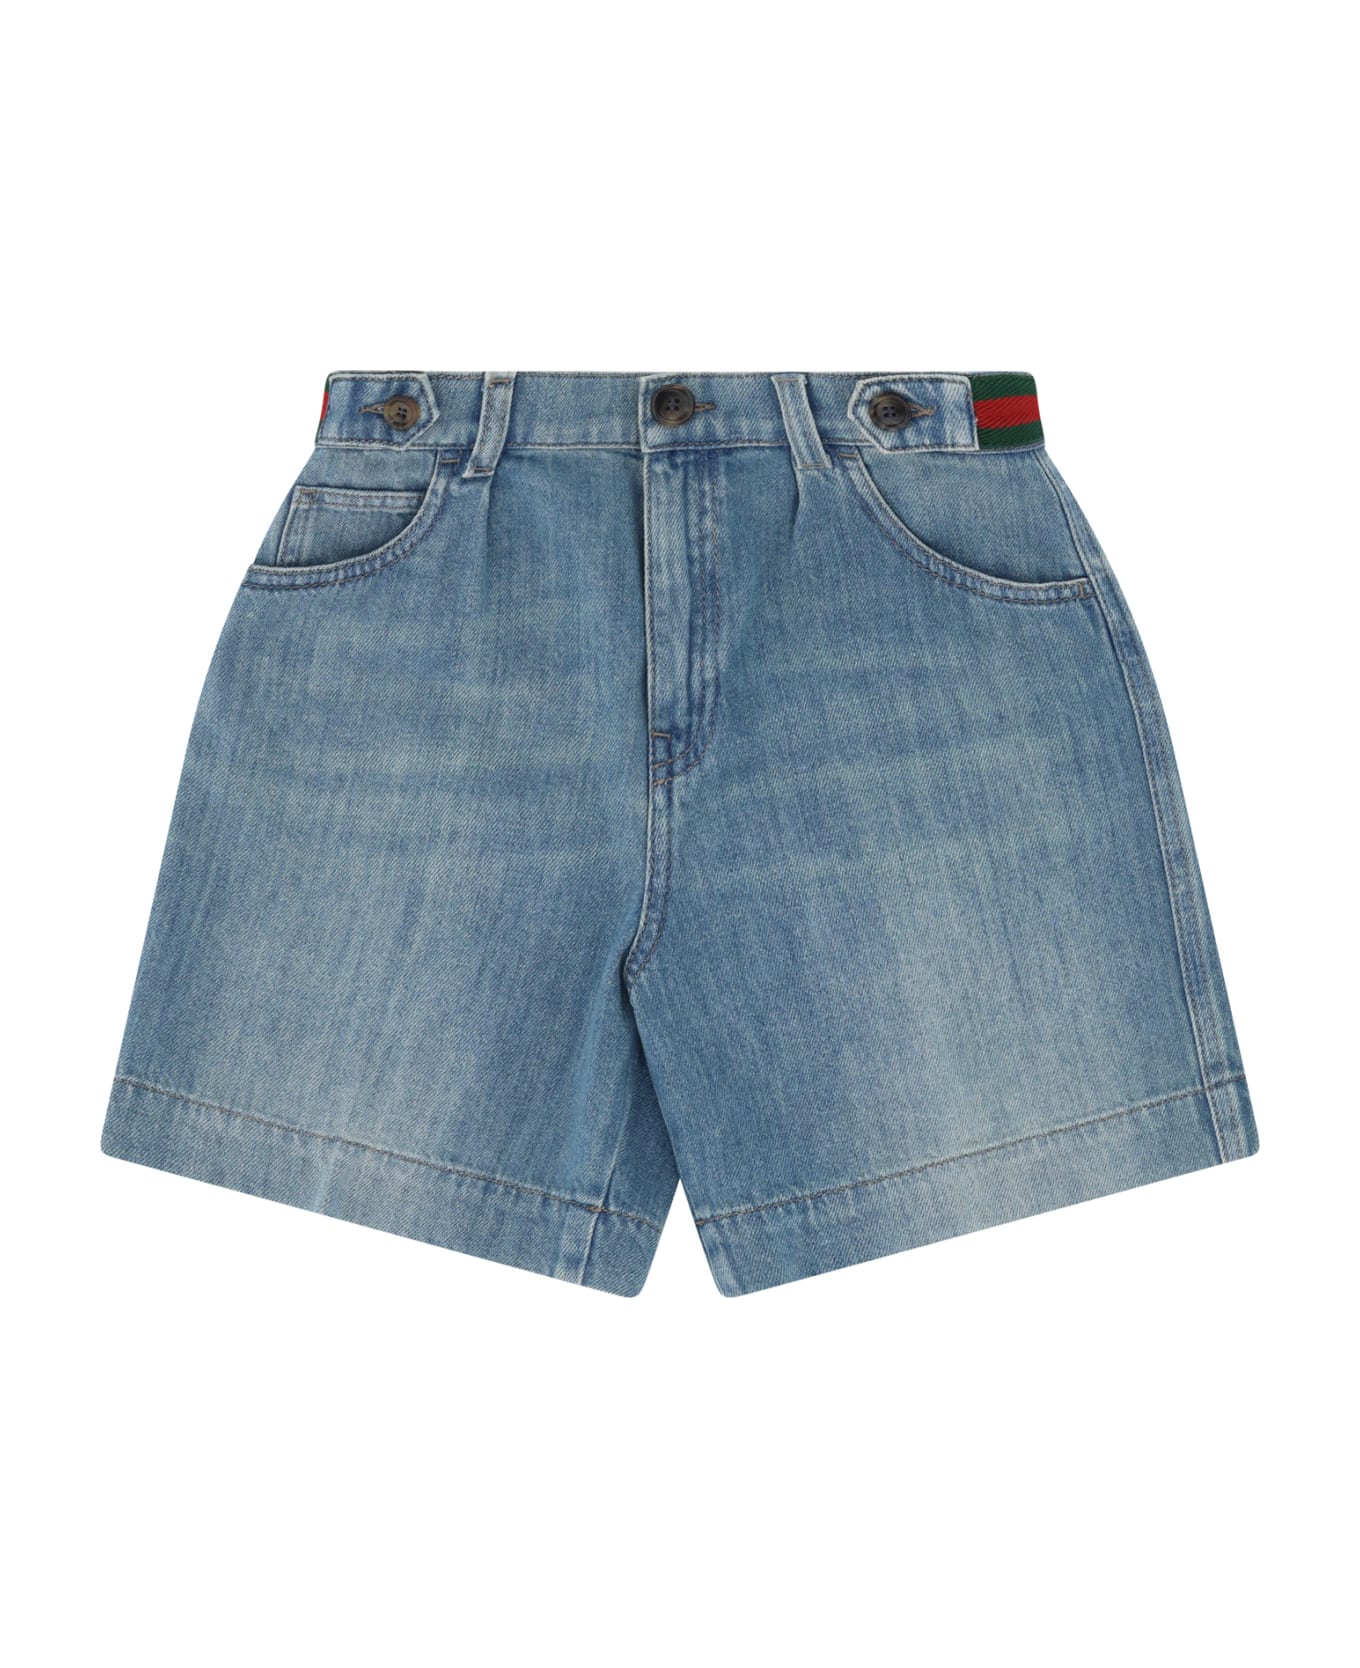 Gucci Bermuda Shorts For Boy - Blue/mix ボトムス